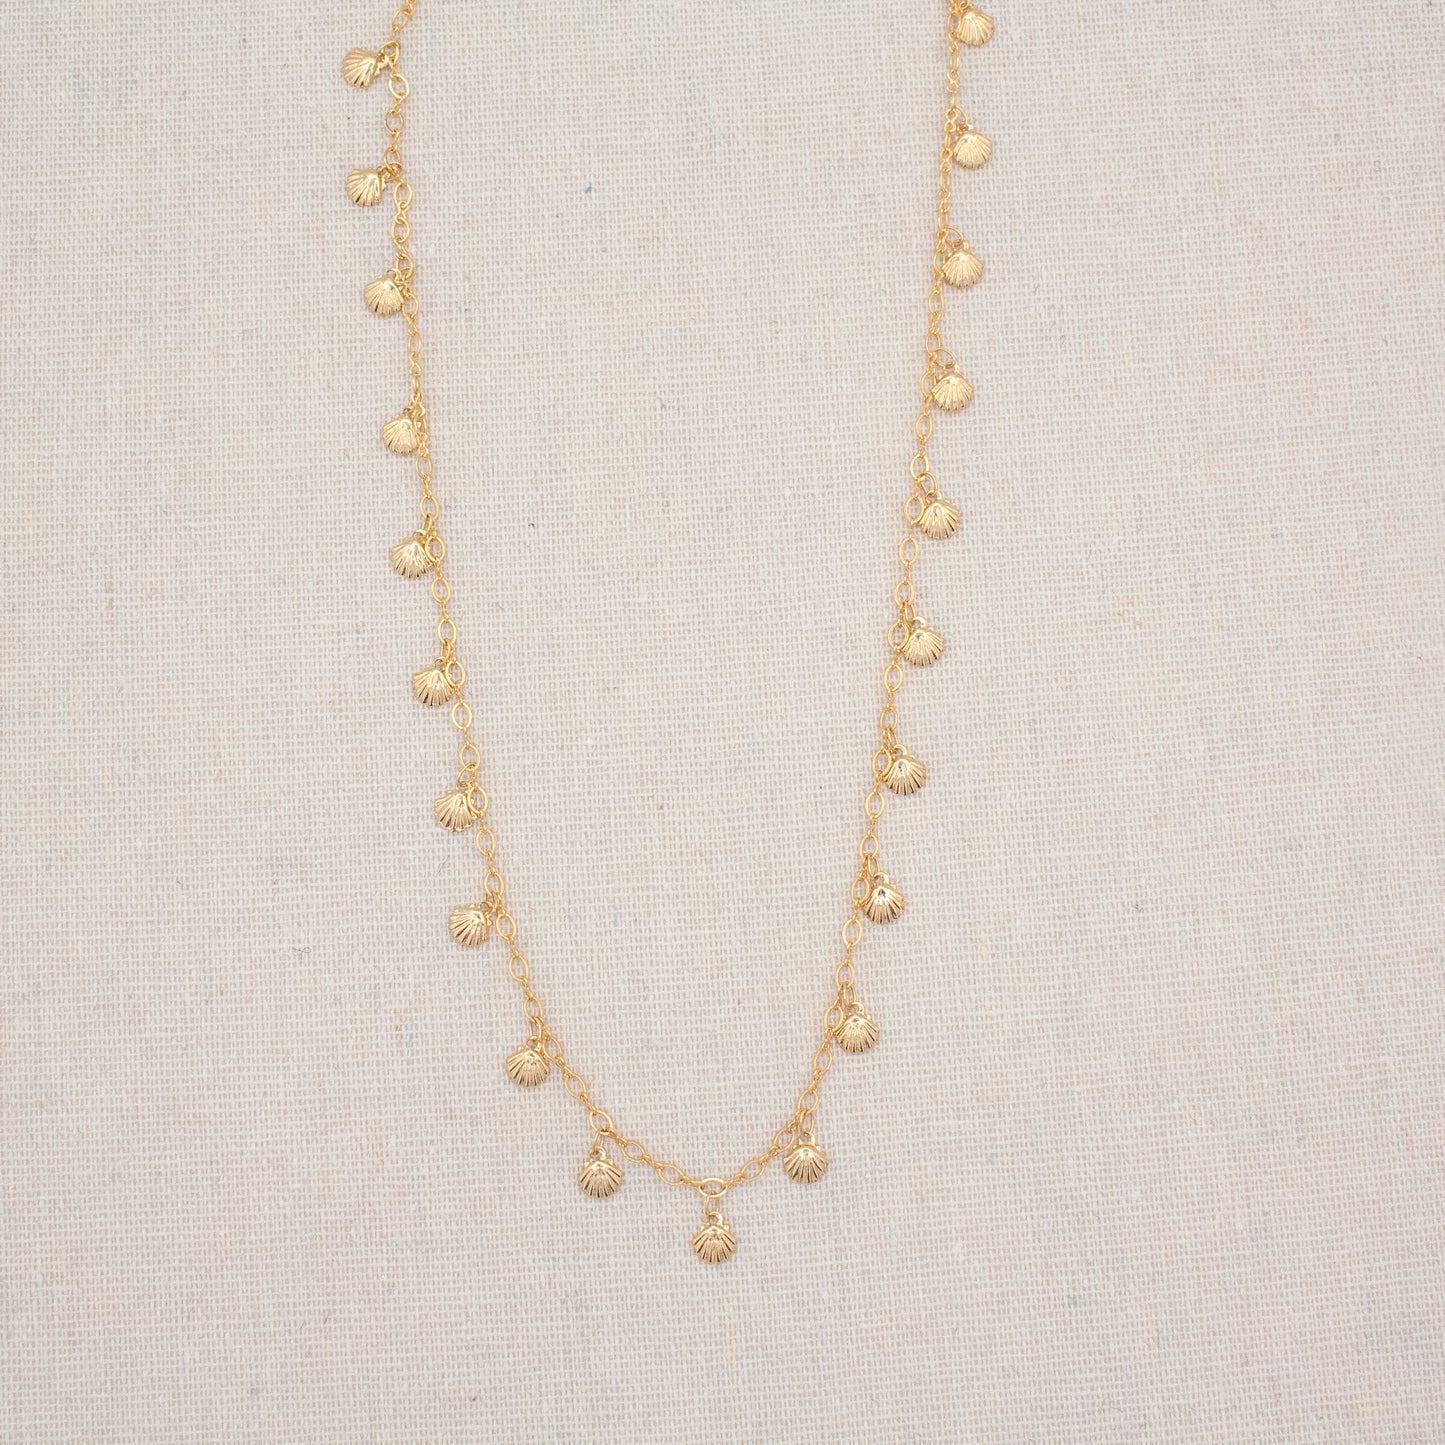 Mini Seashell Necklace